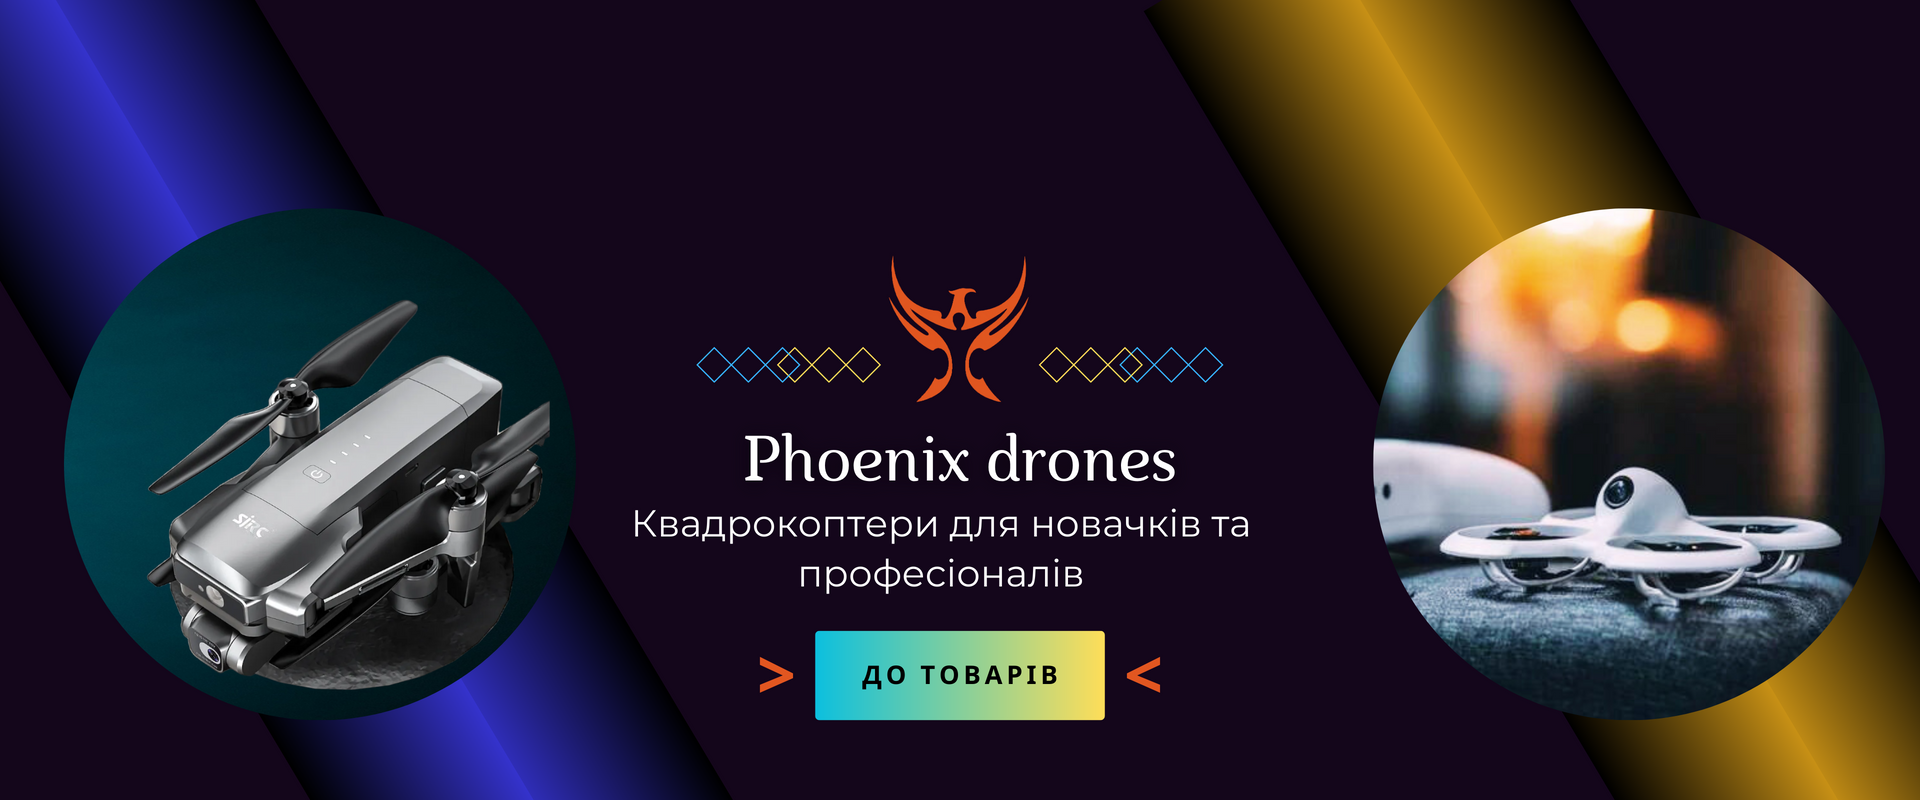 Phoenix drones